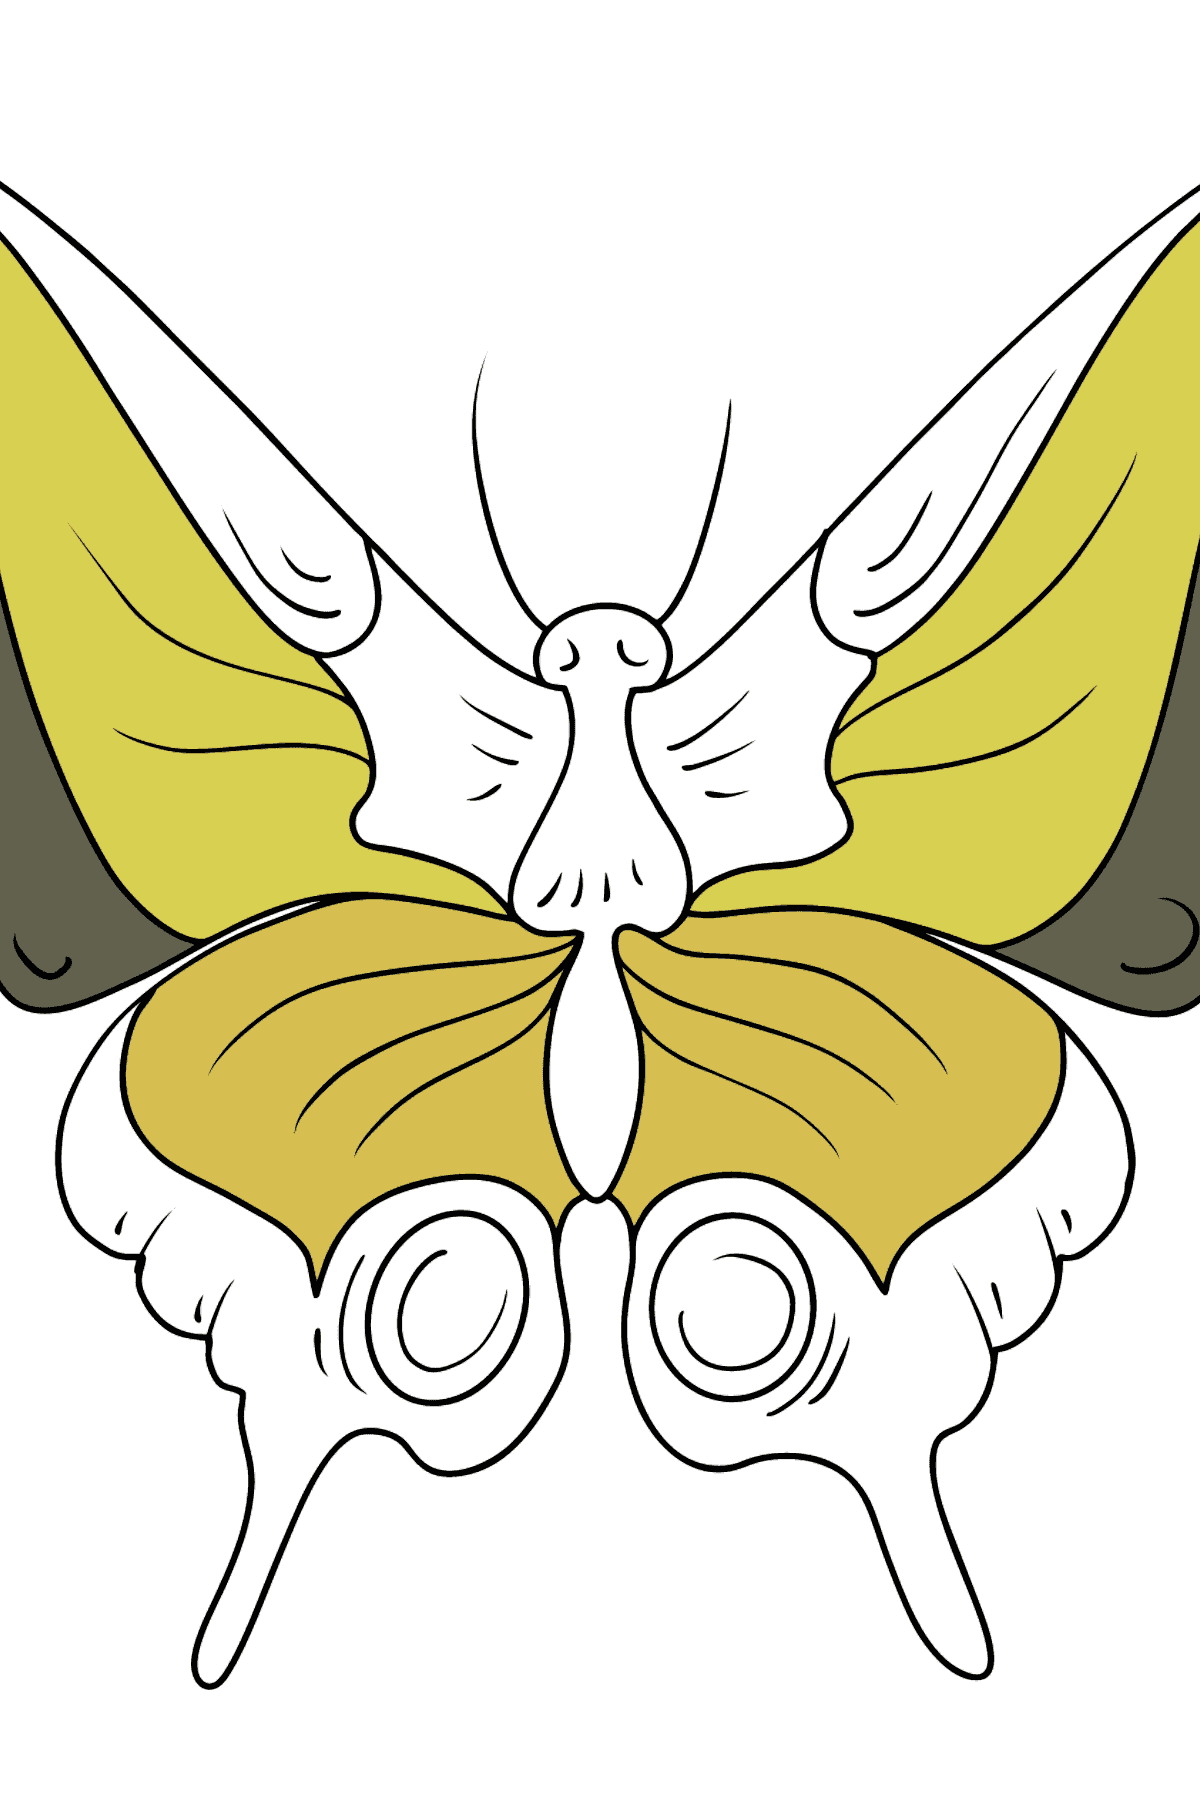 Dibujo de Mariposa cola de golondrina para colorear - Dibujos para Colorear para Niños